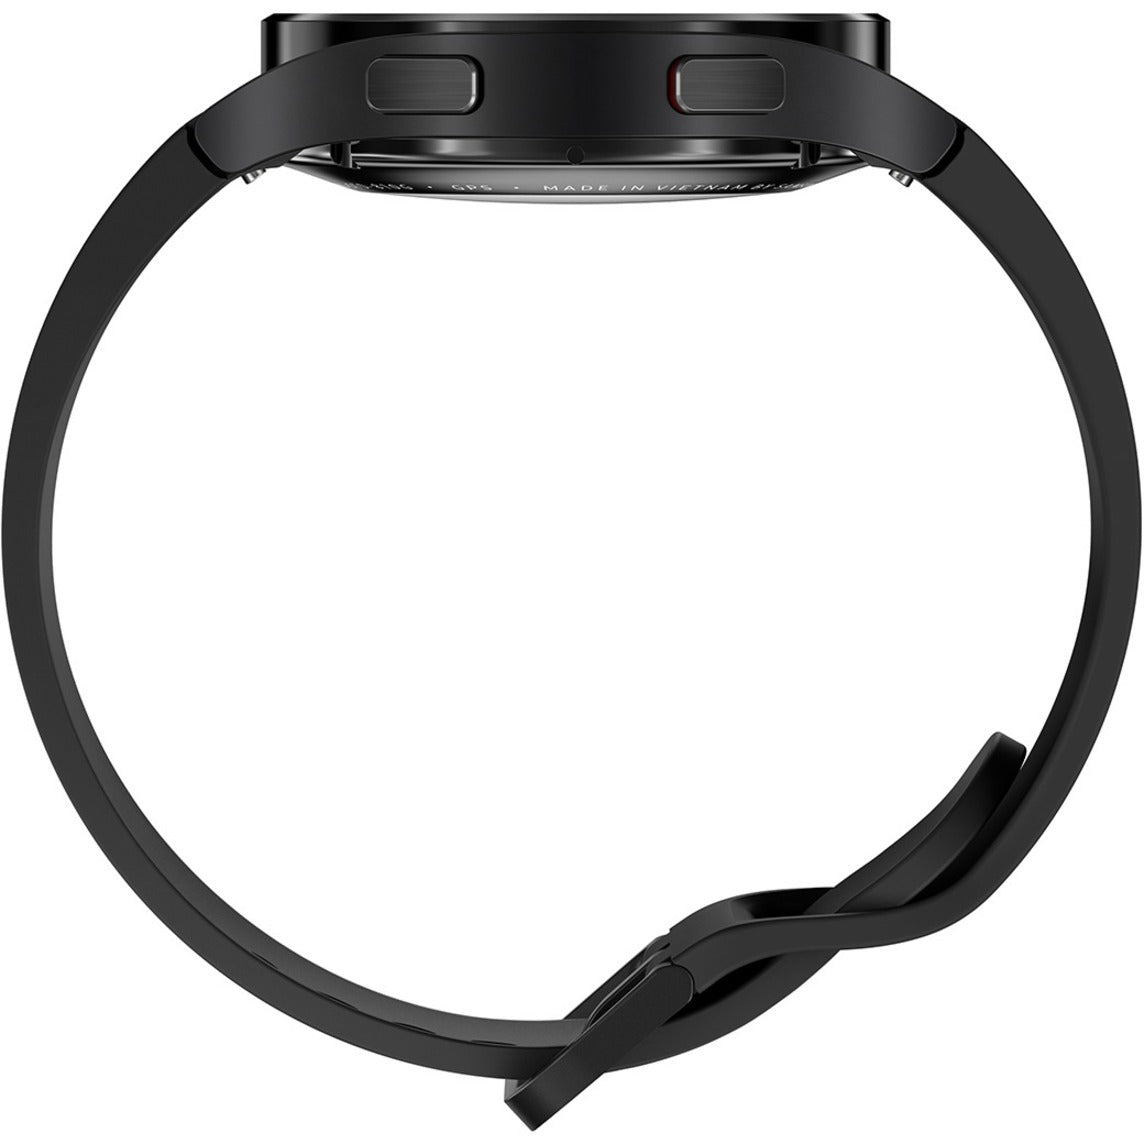 Samsung SM-R860NZKAXAA Galaxy Watch4, 40mm, Black, Bluetooth - Water Resistant, Health & Fitness, IP68